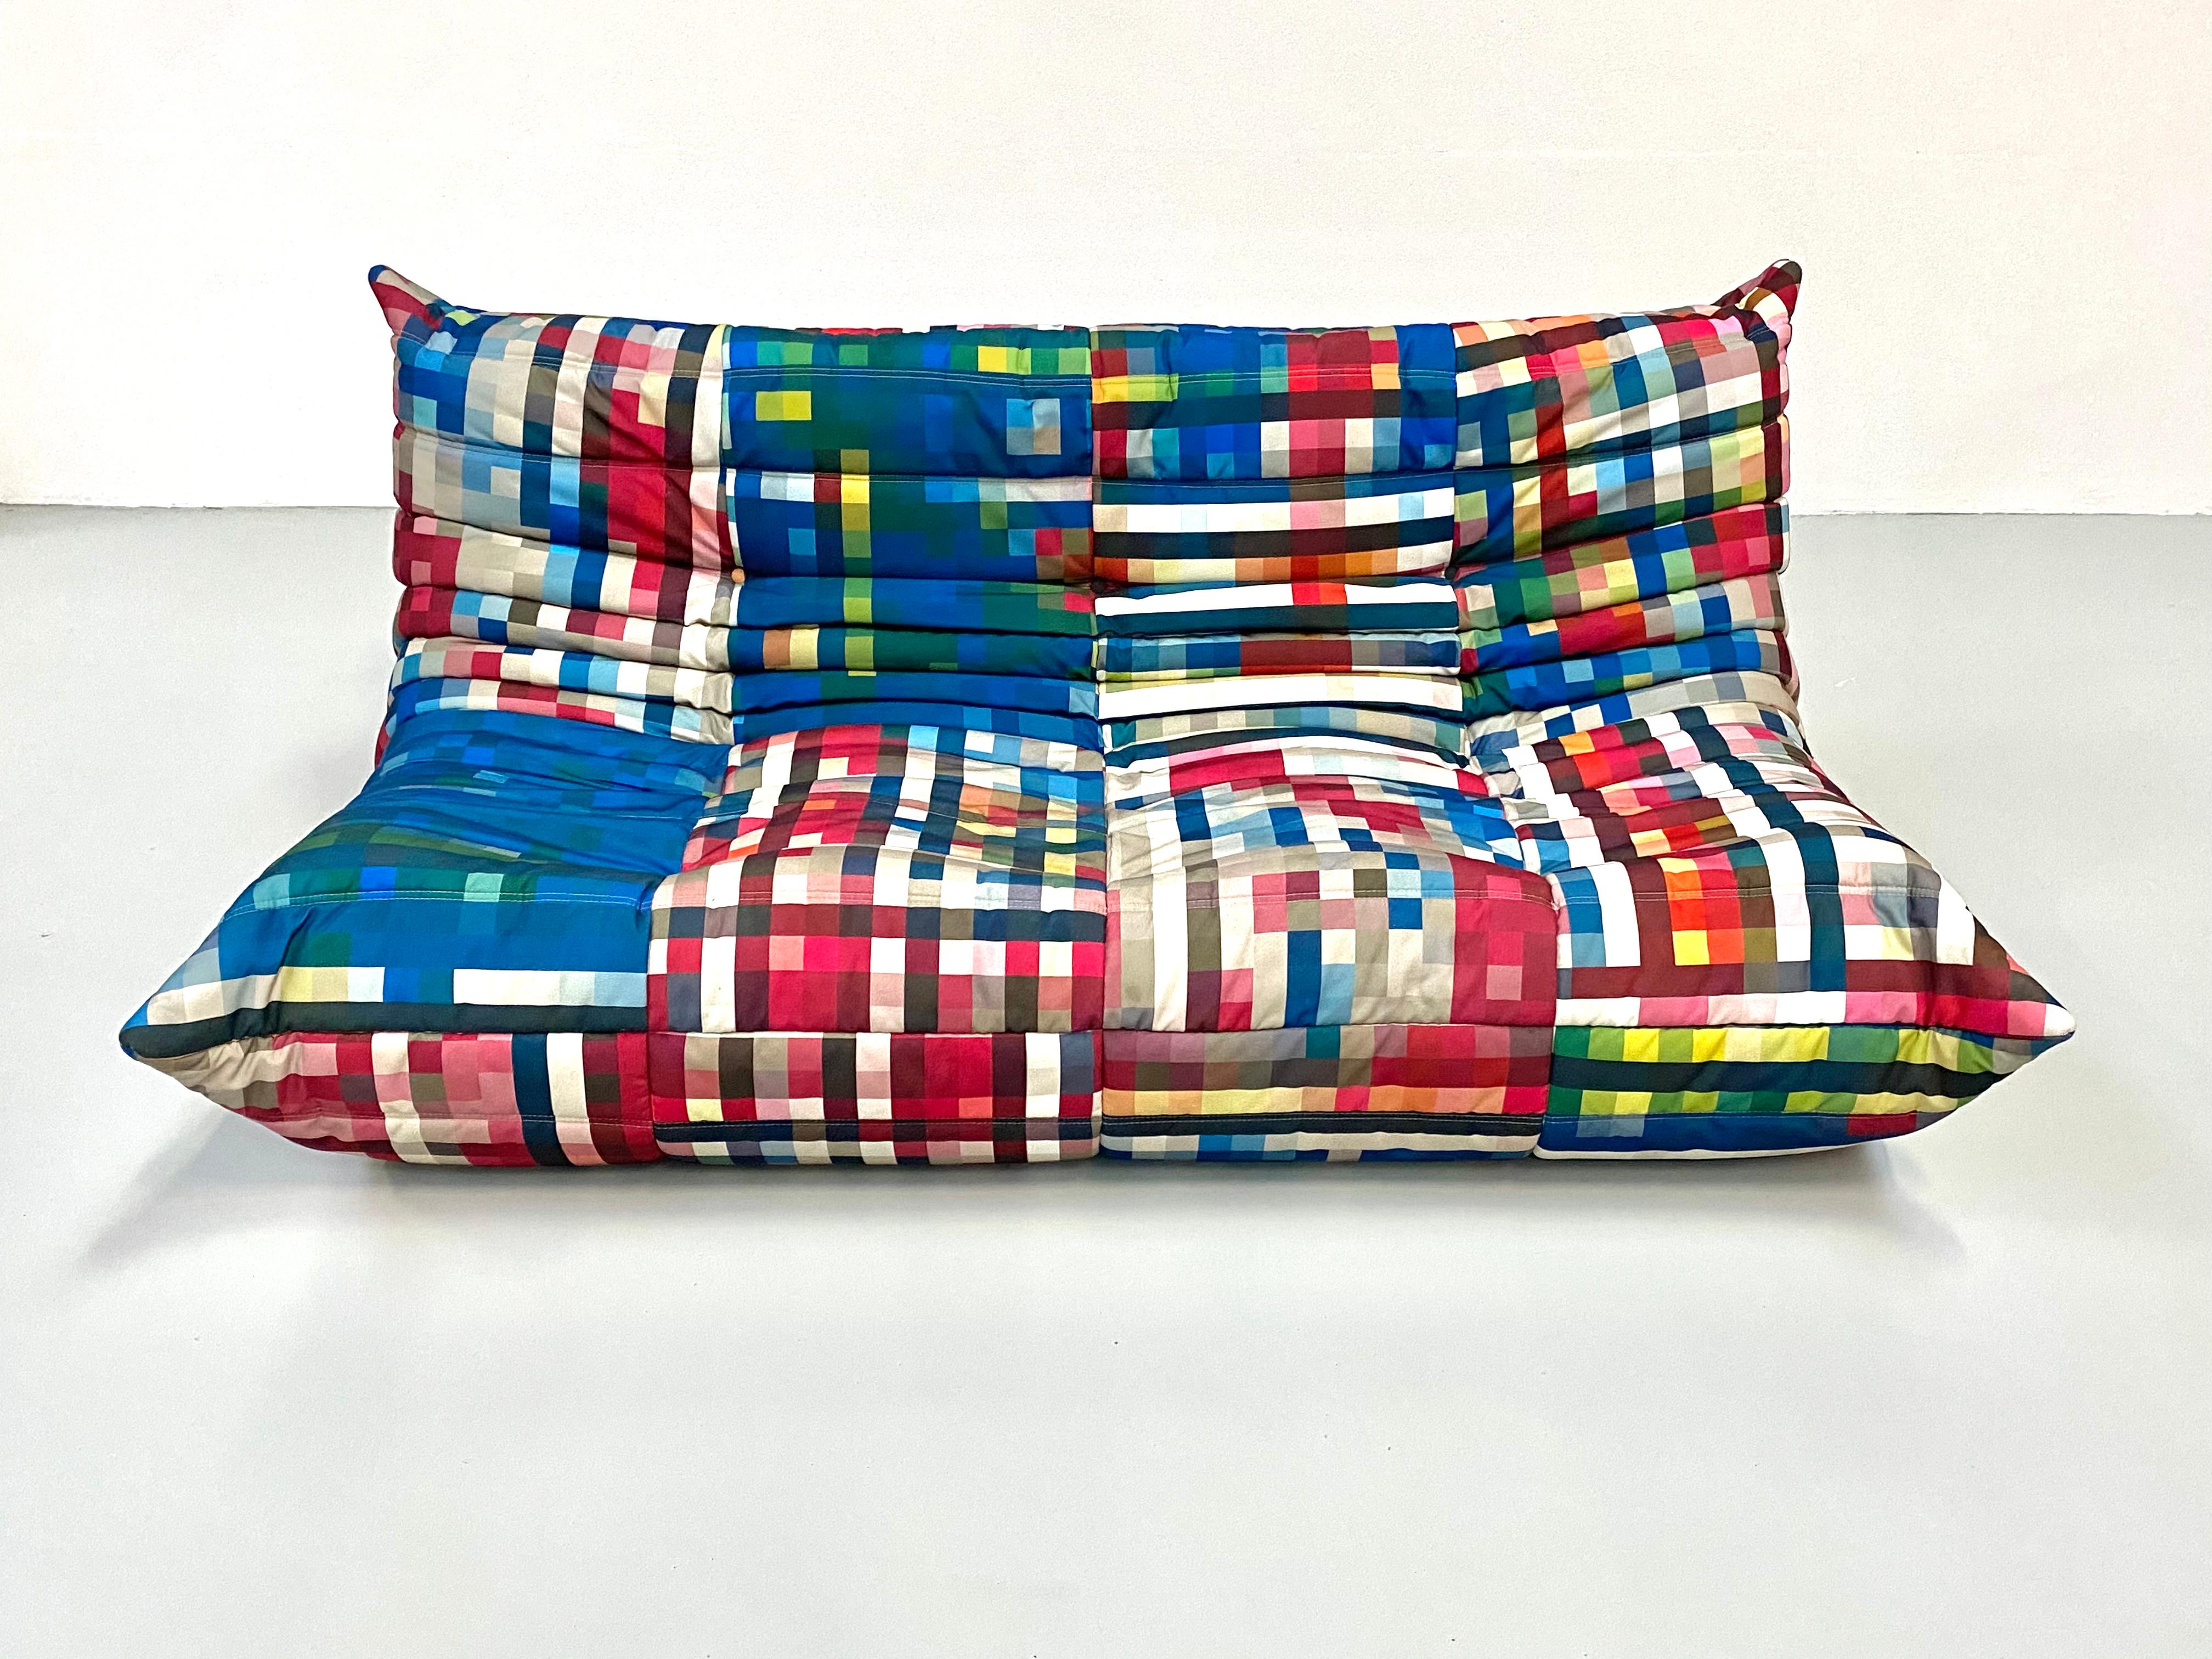 Fabric French Togo Shanghai Sofa by Michel Ducaroy & Cristian Zuzunga for Ligne Roset. For Sale